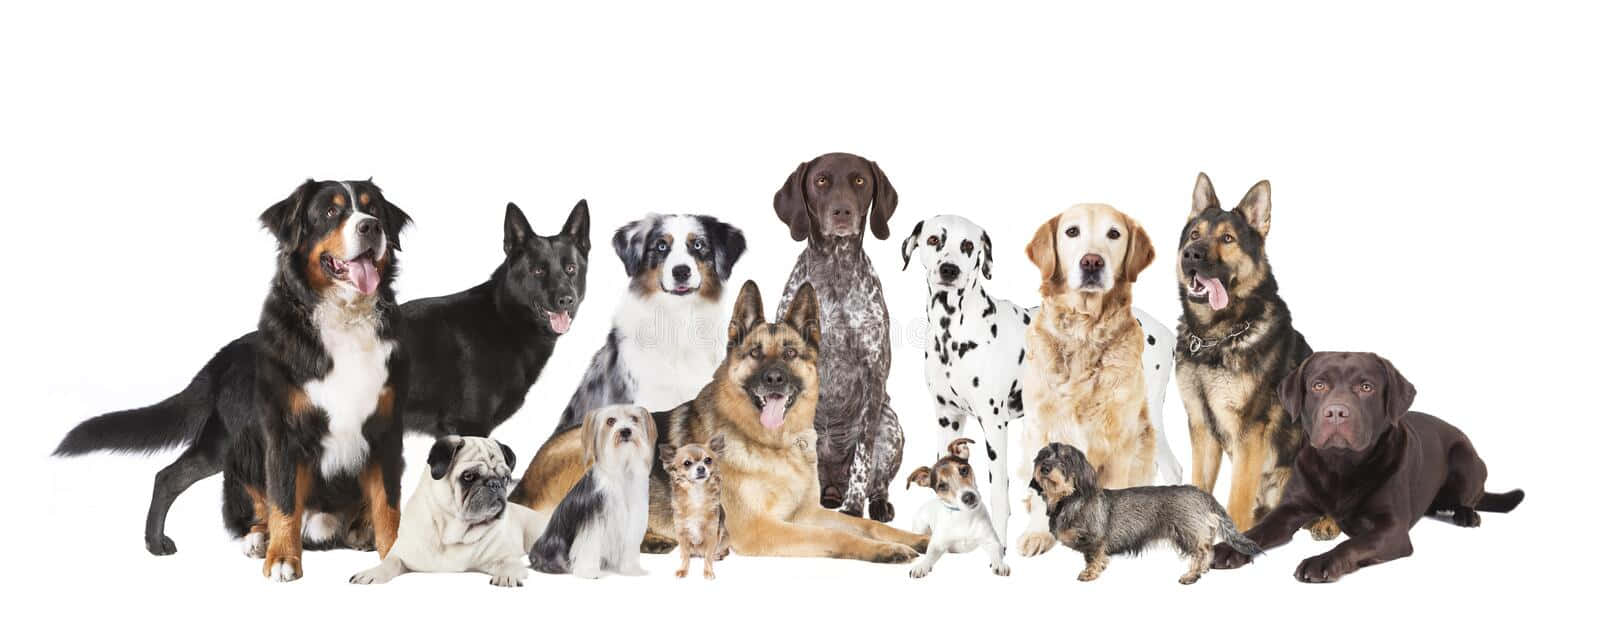 Shepherd Dog Breeds Group Photo Wallpaper